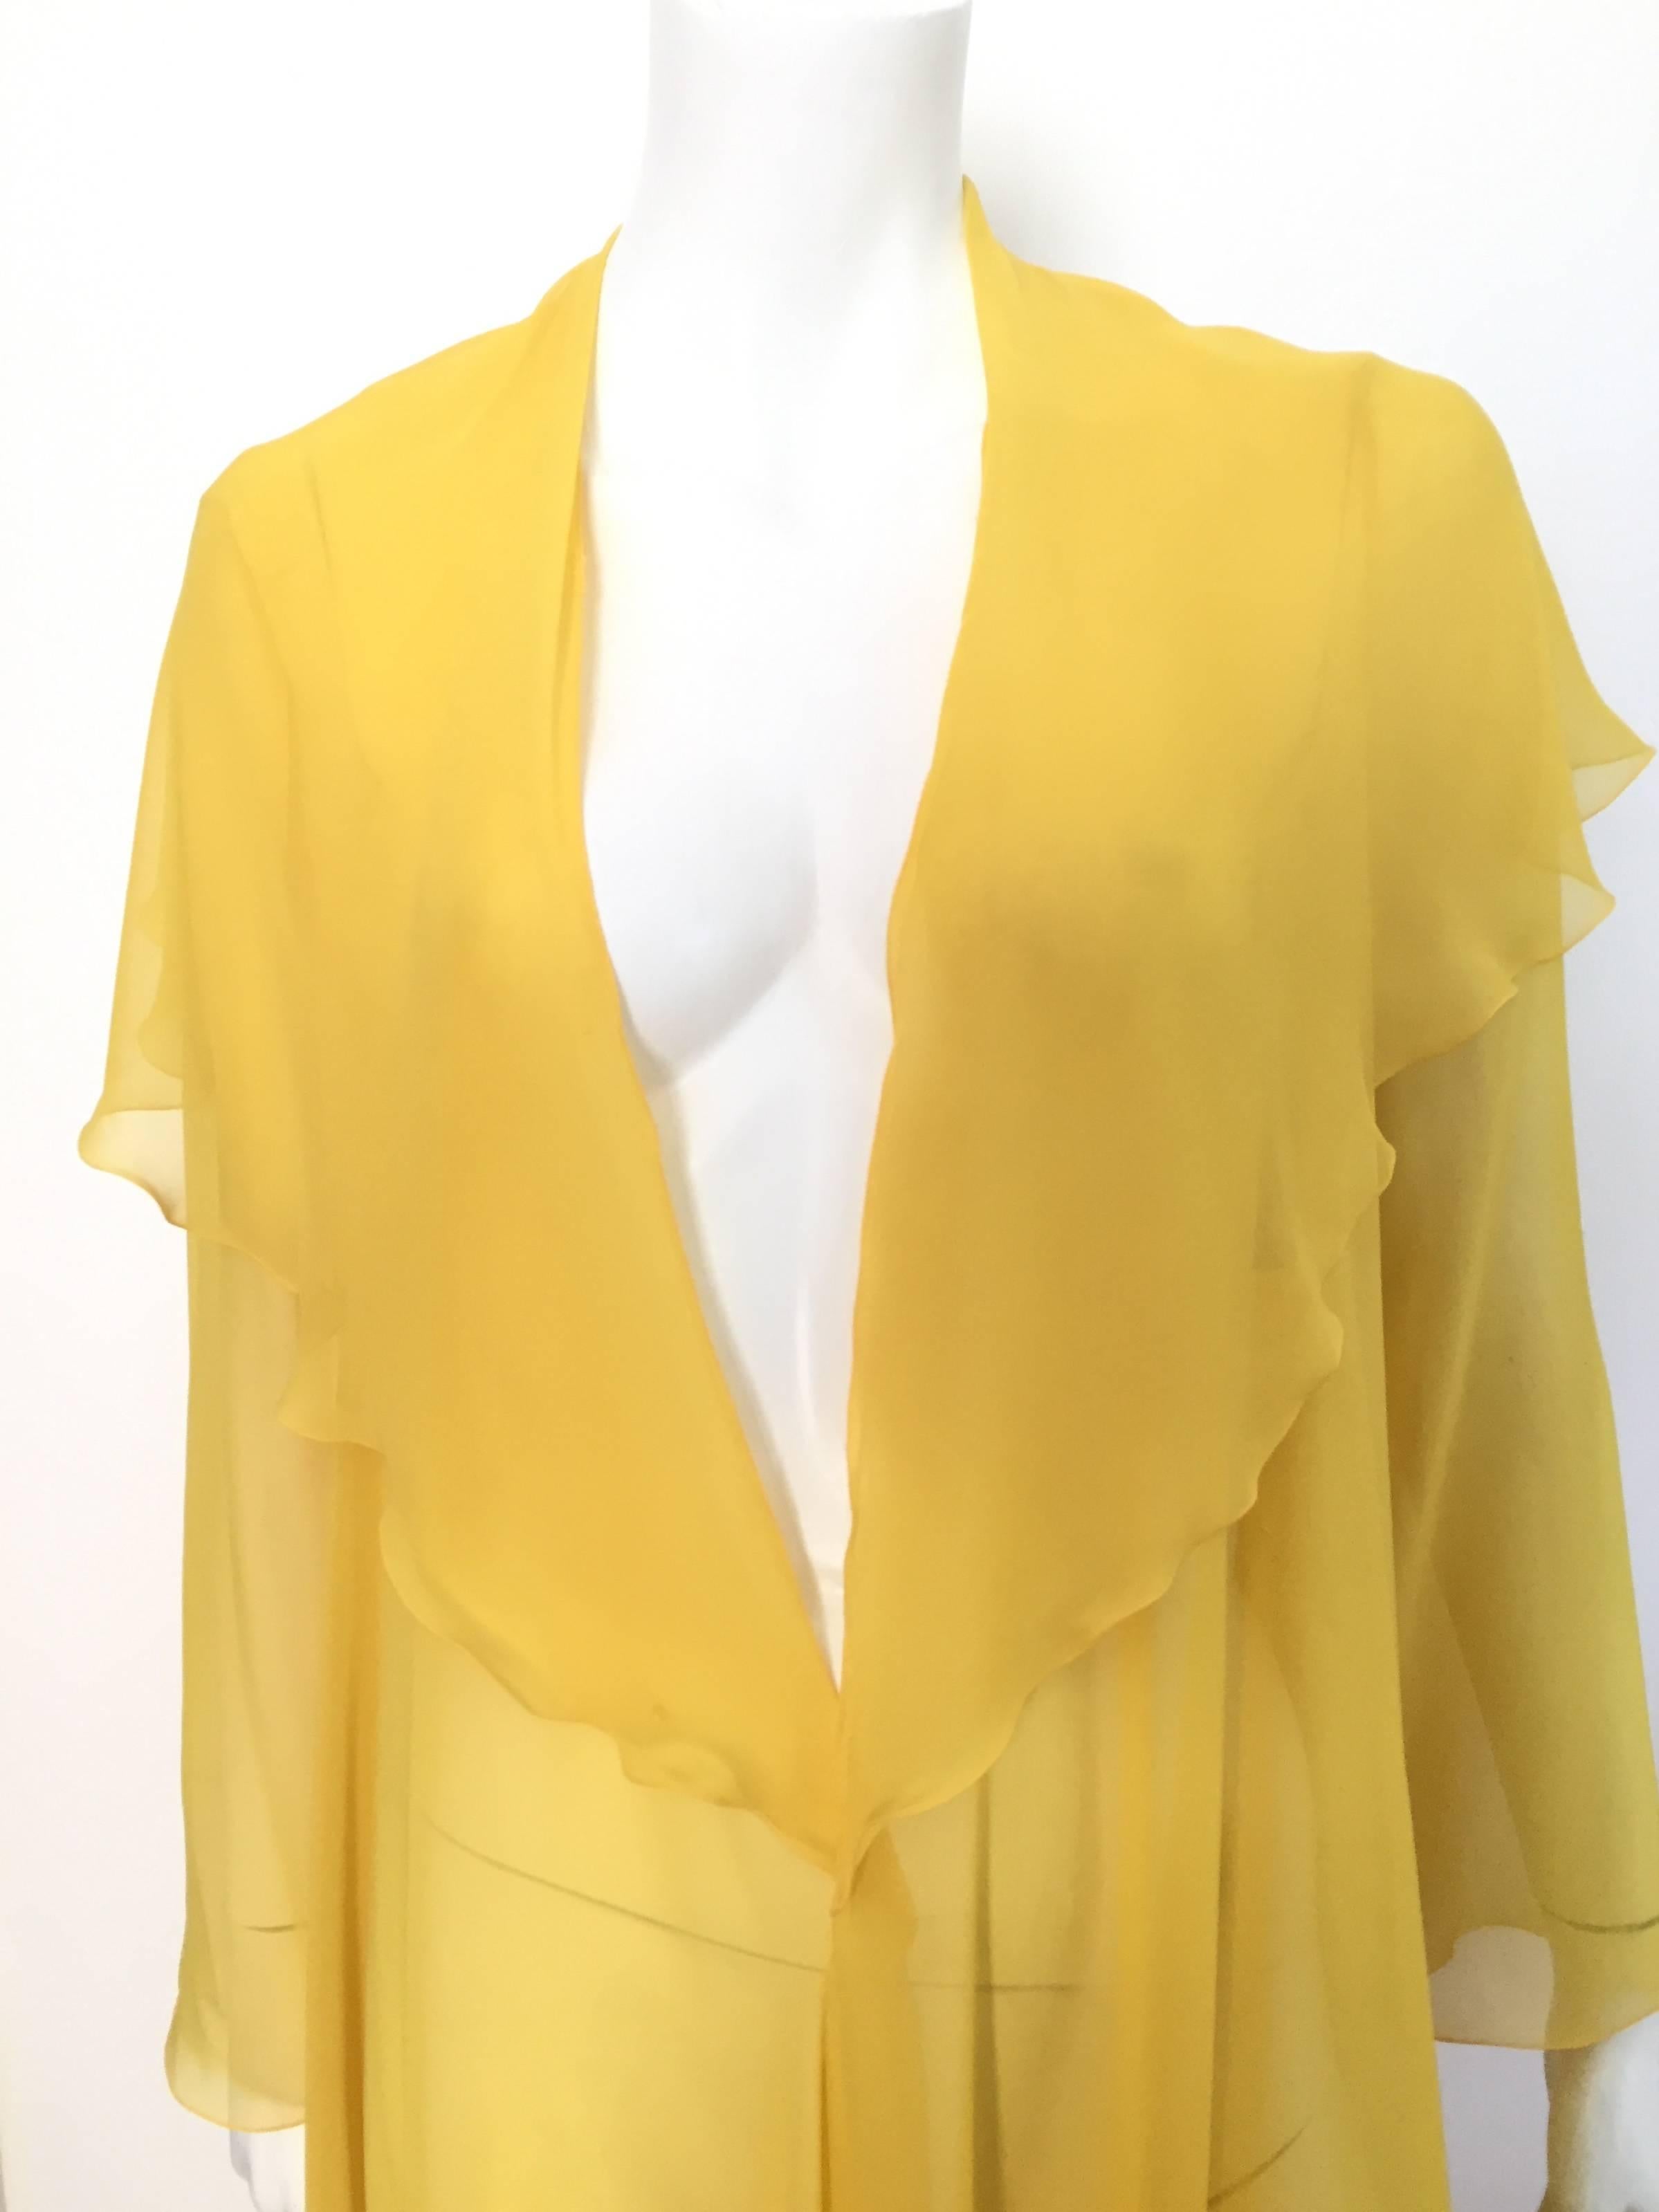 Orange Loris Azzaro Yellow Silk Sheer Jacket Size 2 / 4. For Sale